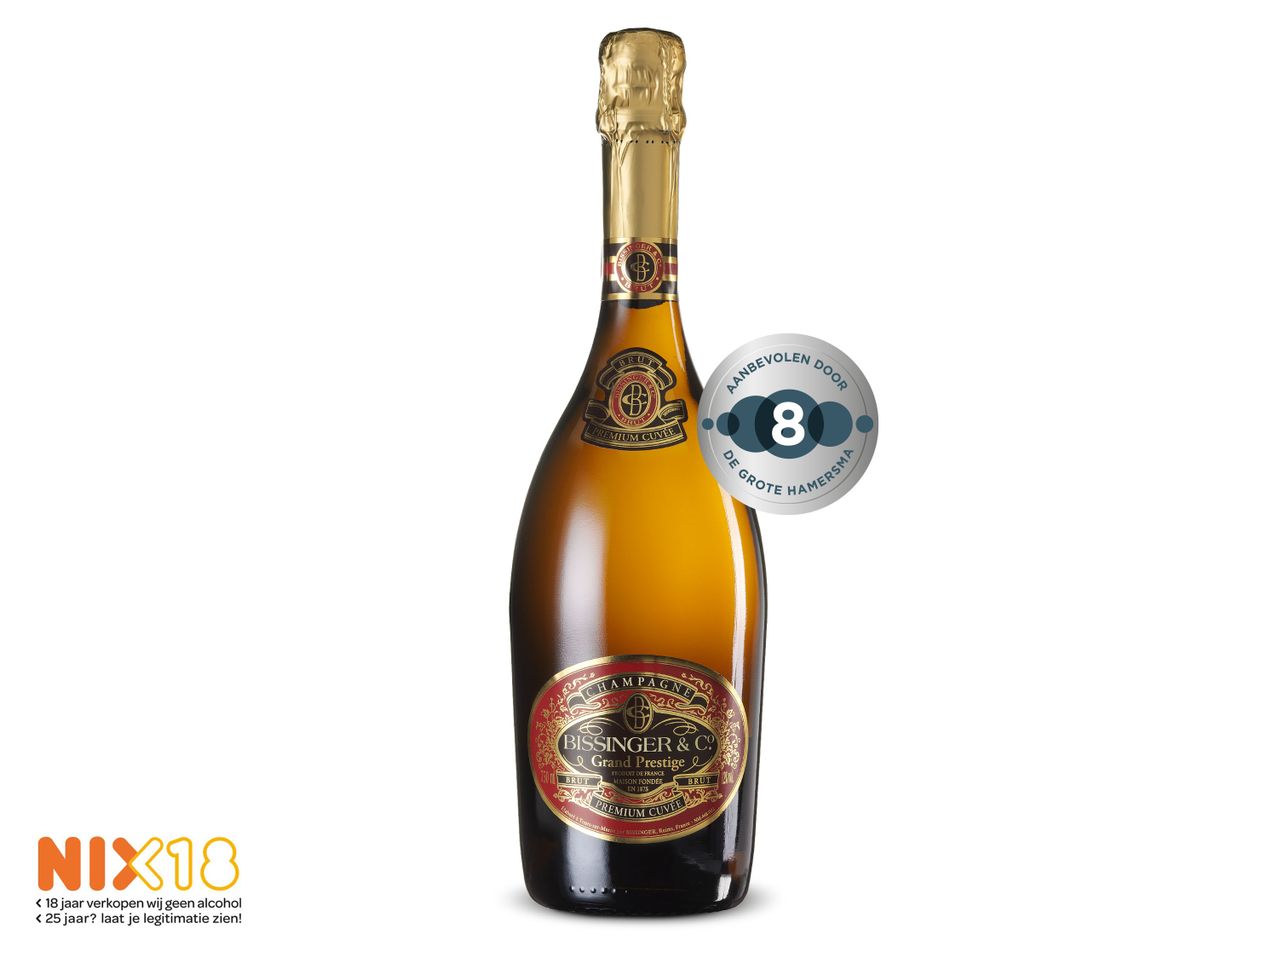 Vergelijk supermarkt aanbiedingen - Champagne Bissinger & Co Grand Prestige